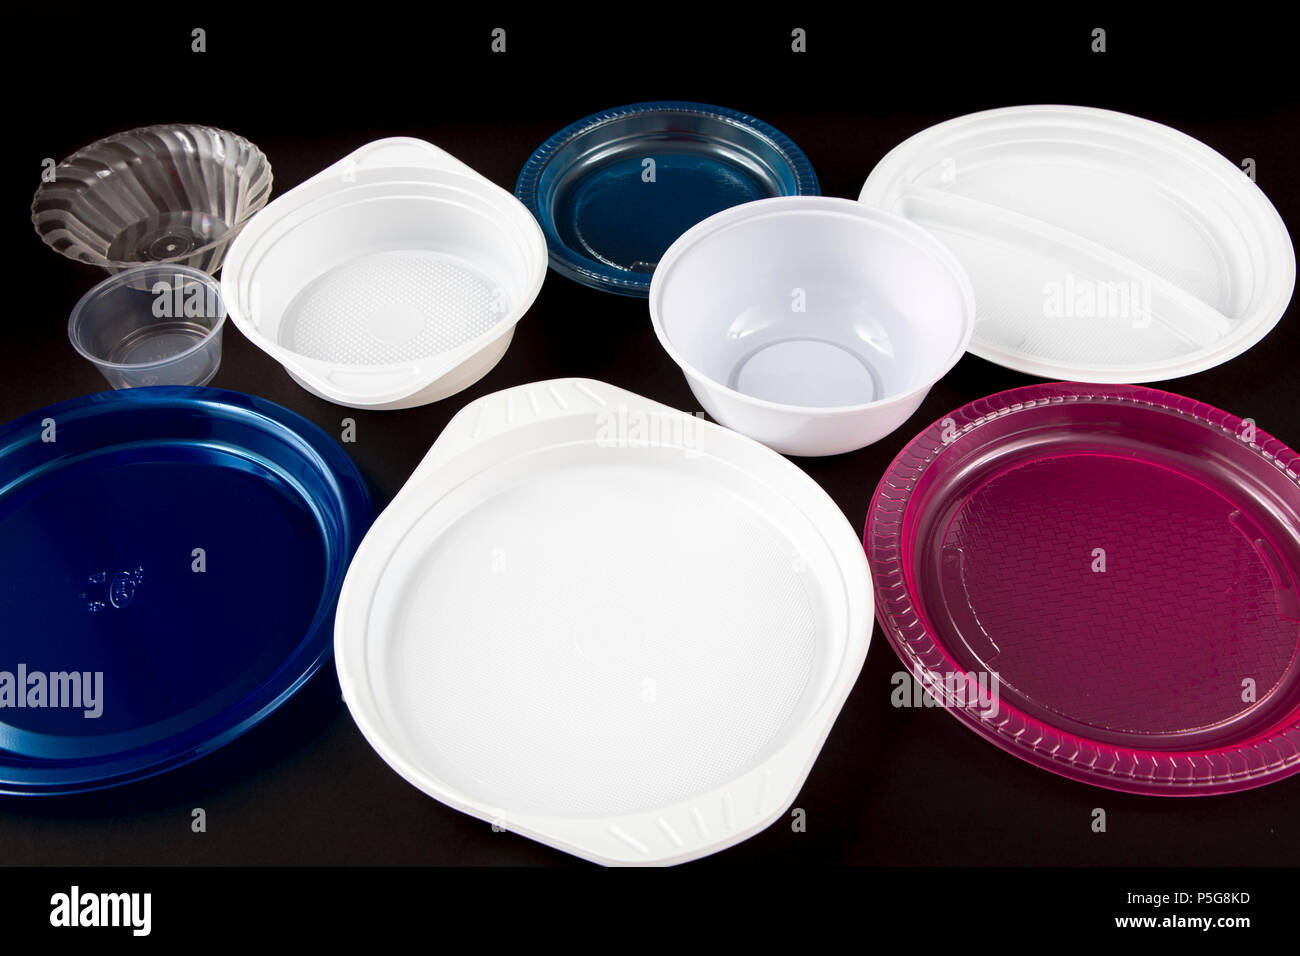 https://c8.alamy.com/compes/p5g8kd/platos-de-plastico-platos-de-plastico-platos-desechables-residuos-de-plastico-de-diferentes-formas-y-colores-p5g8kd.jpg